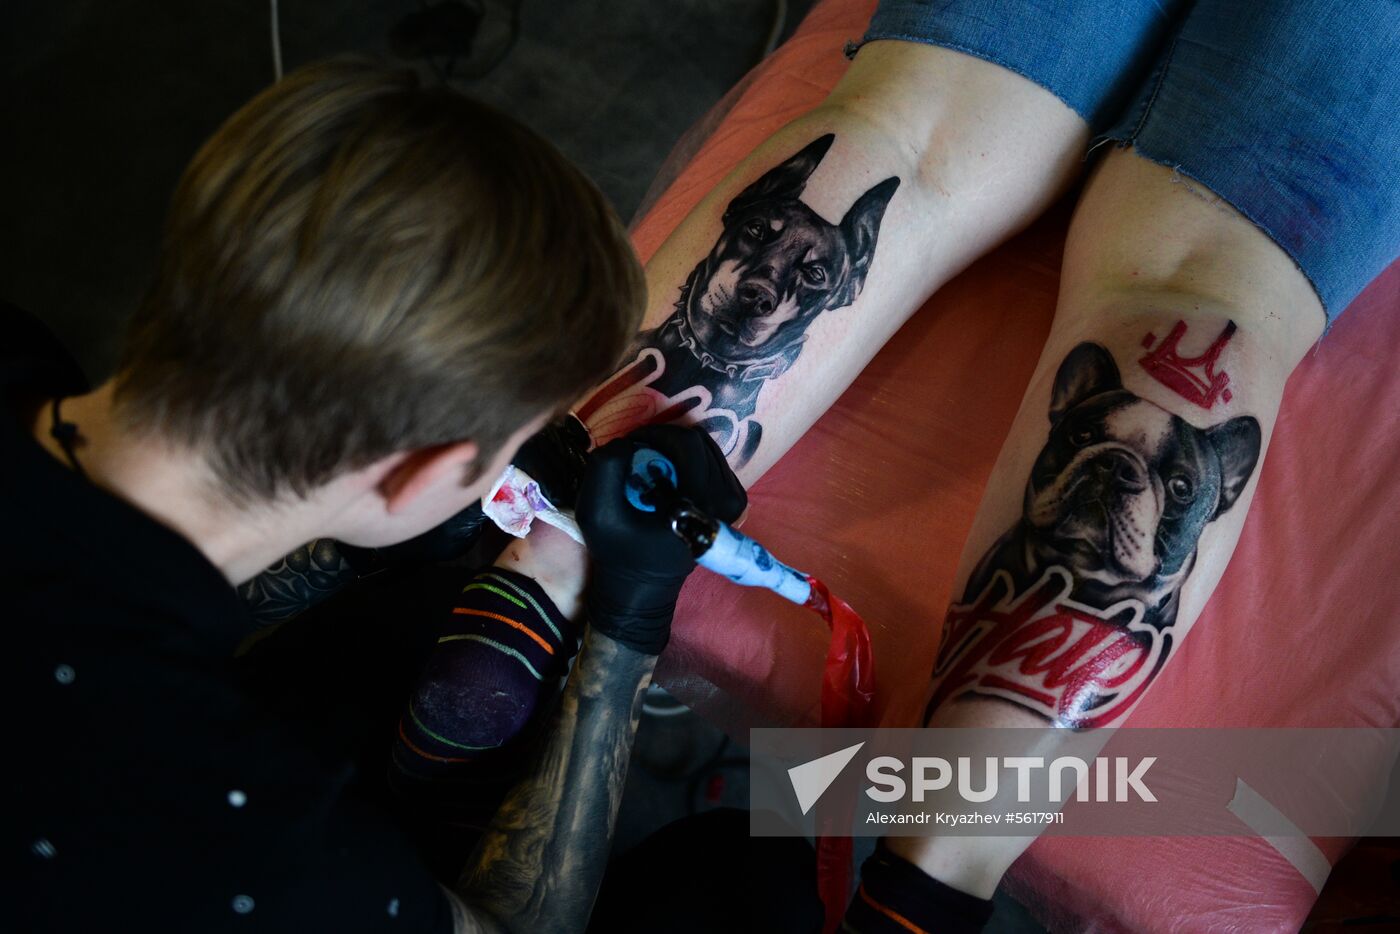 7th Siberian Tattoo Festival